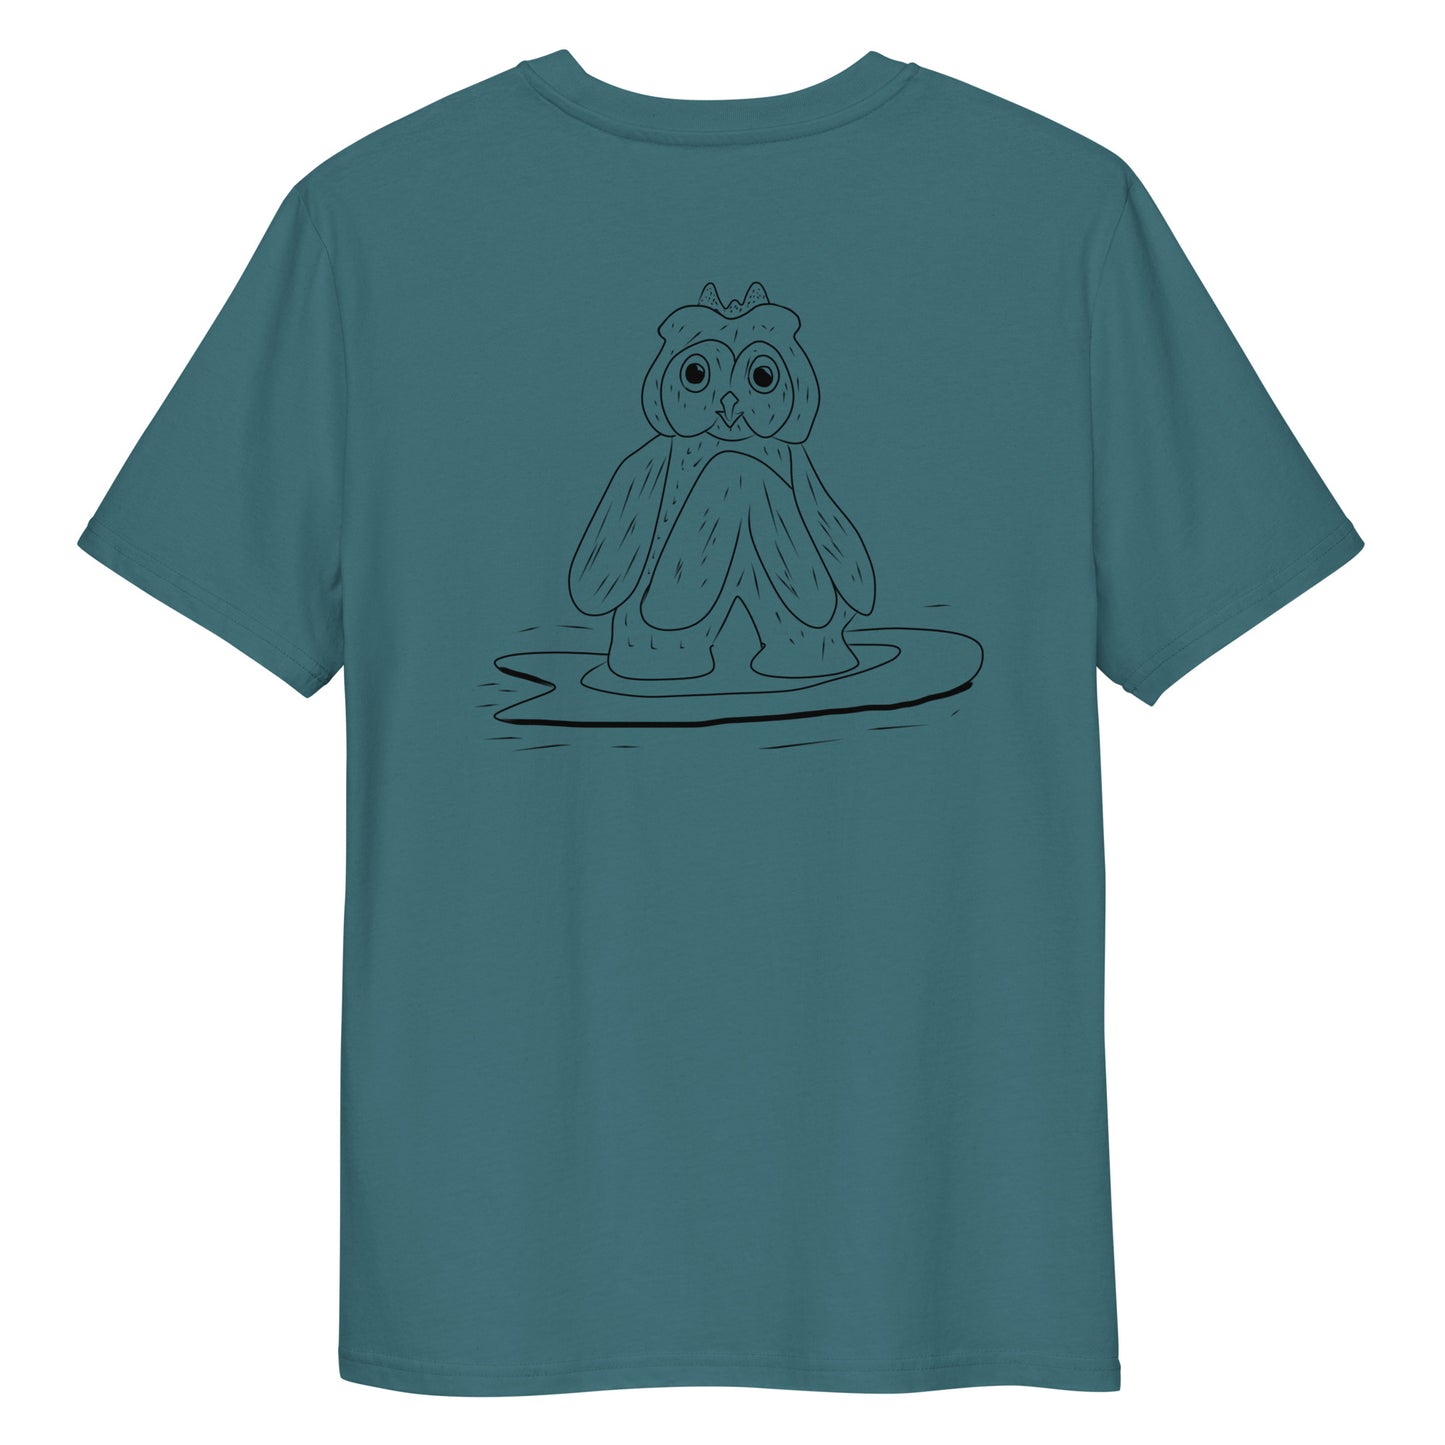 Surfing Owl | 100% Organic Cotton T Shirt in stargazer back